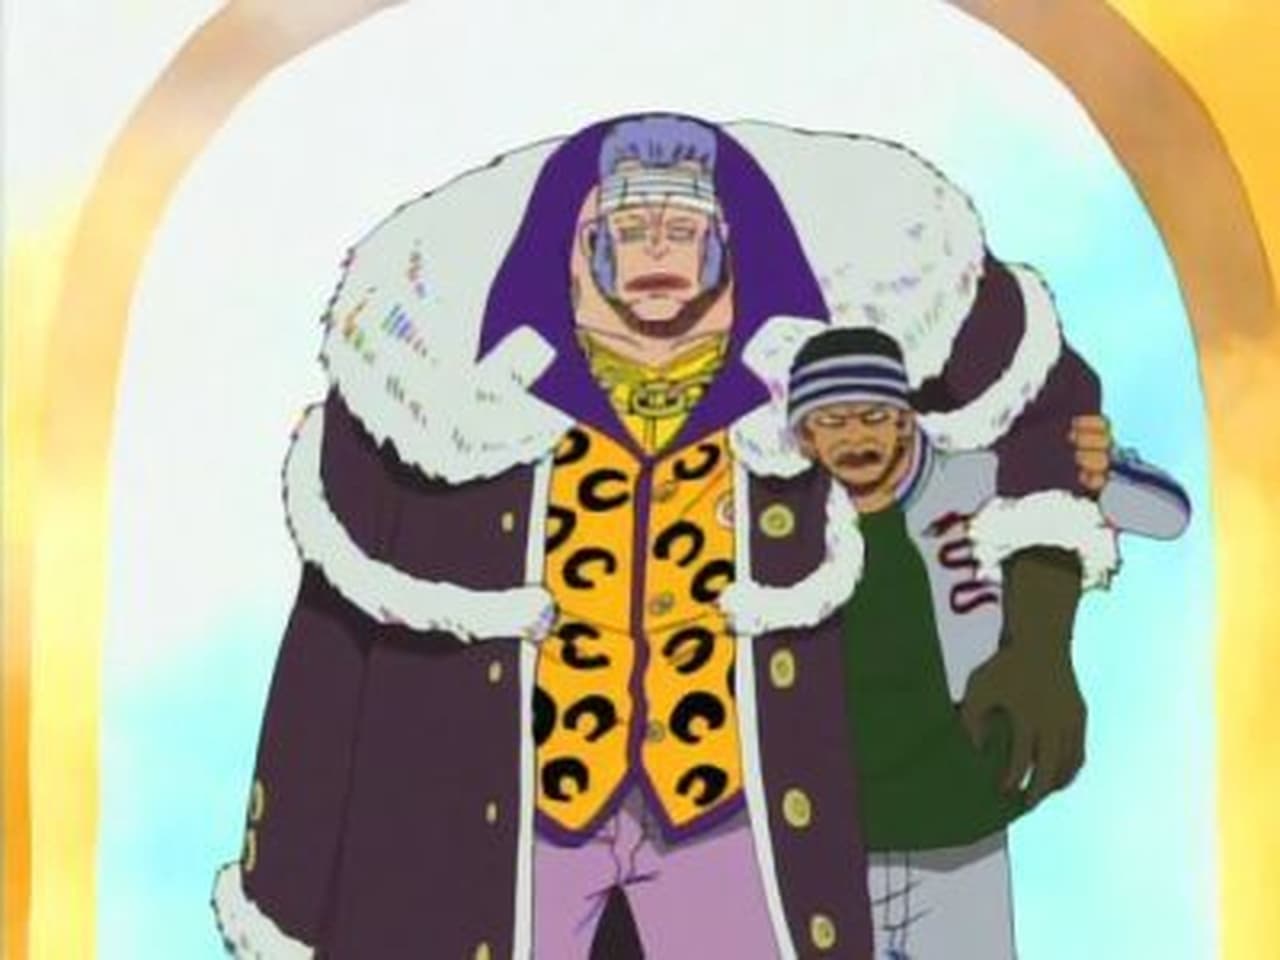 One Piece - Season 1 Episode 22 : The Strongest Pirate Fleet! Commodore Don Krieg!